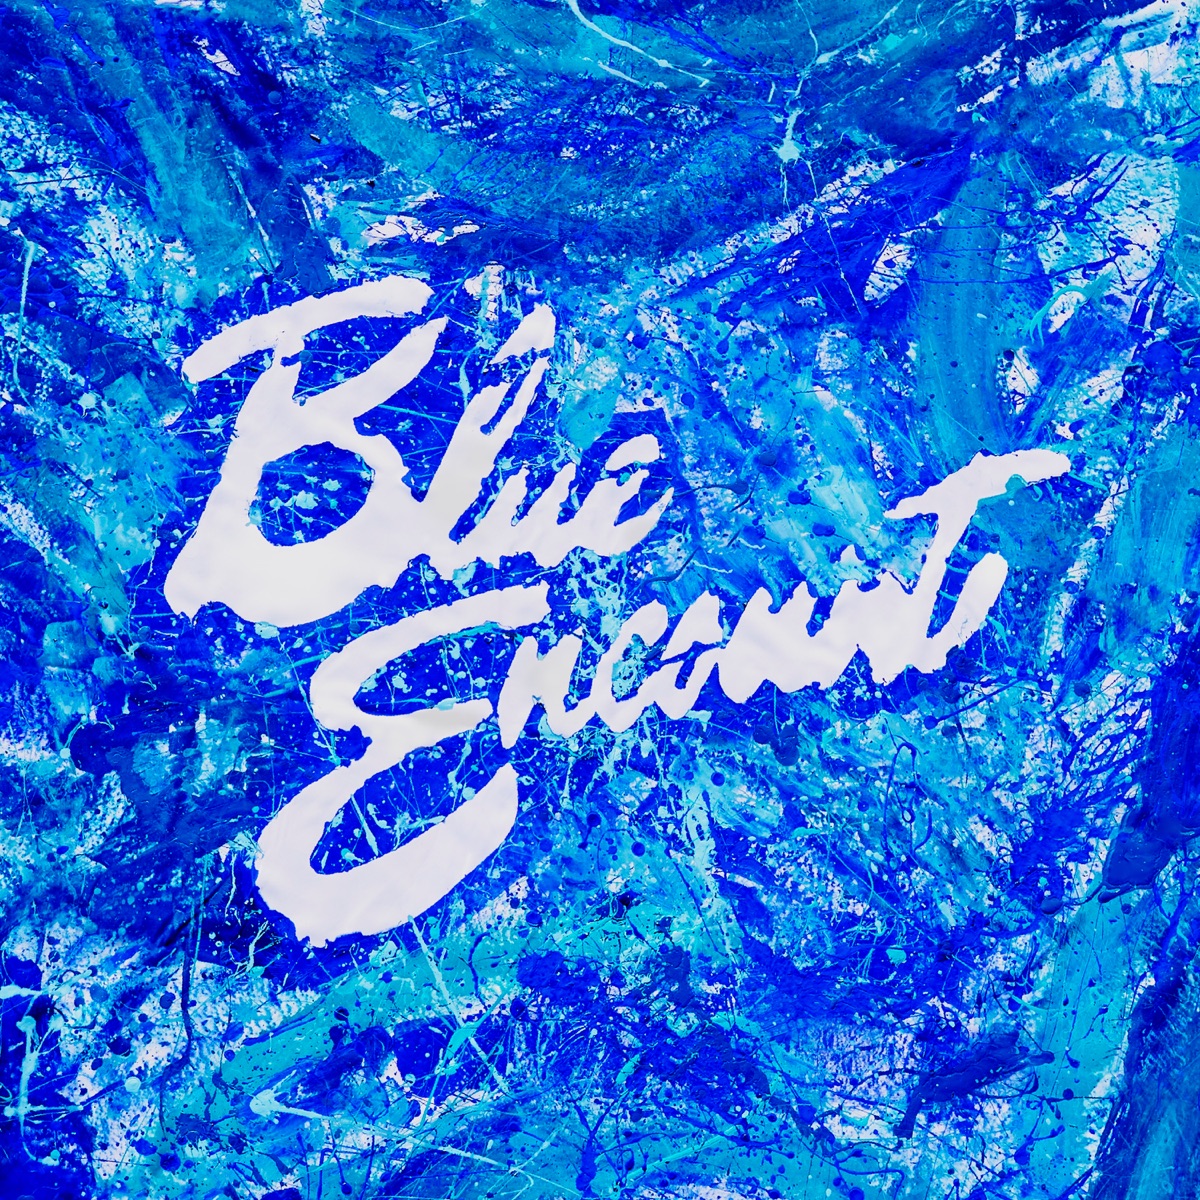 『BLUE ENCOUNT - 青』収録の『青』ジャケット